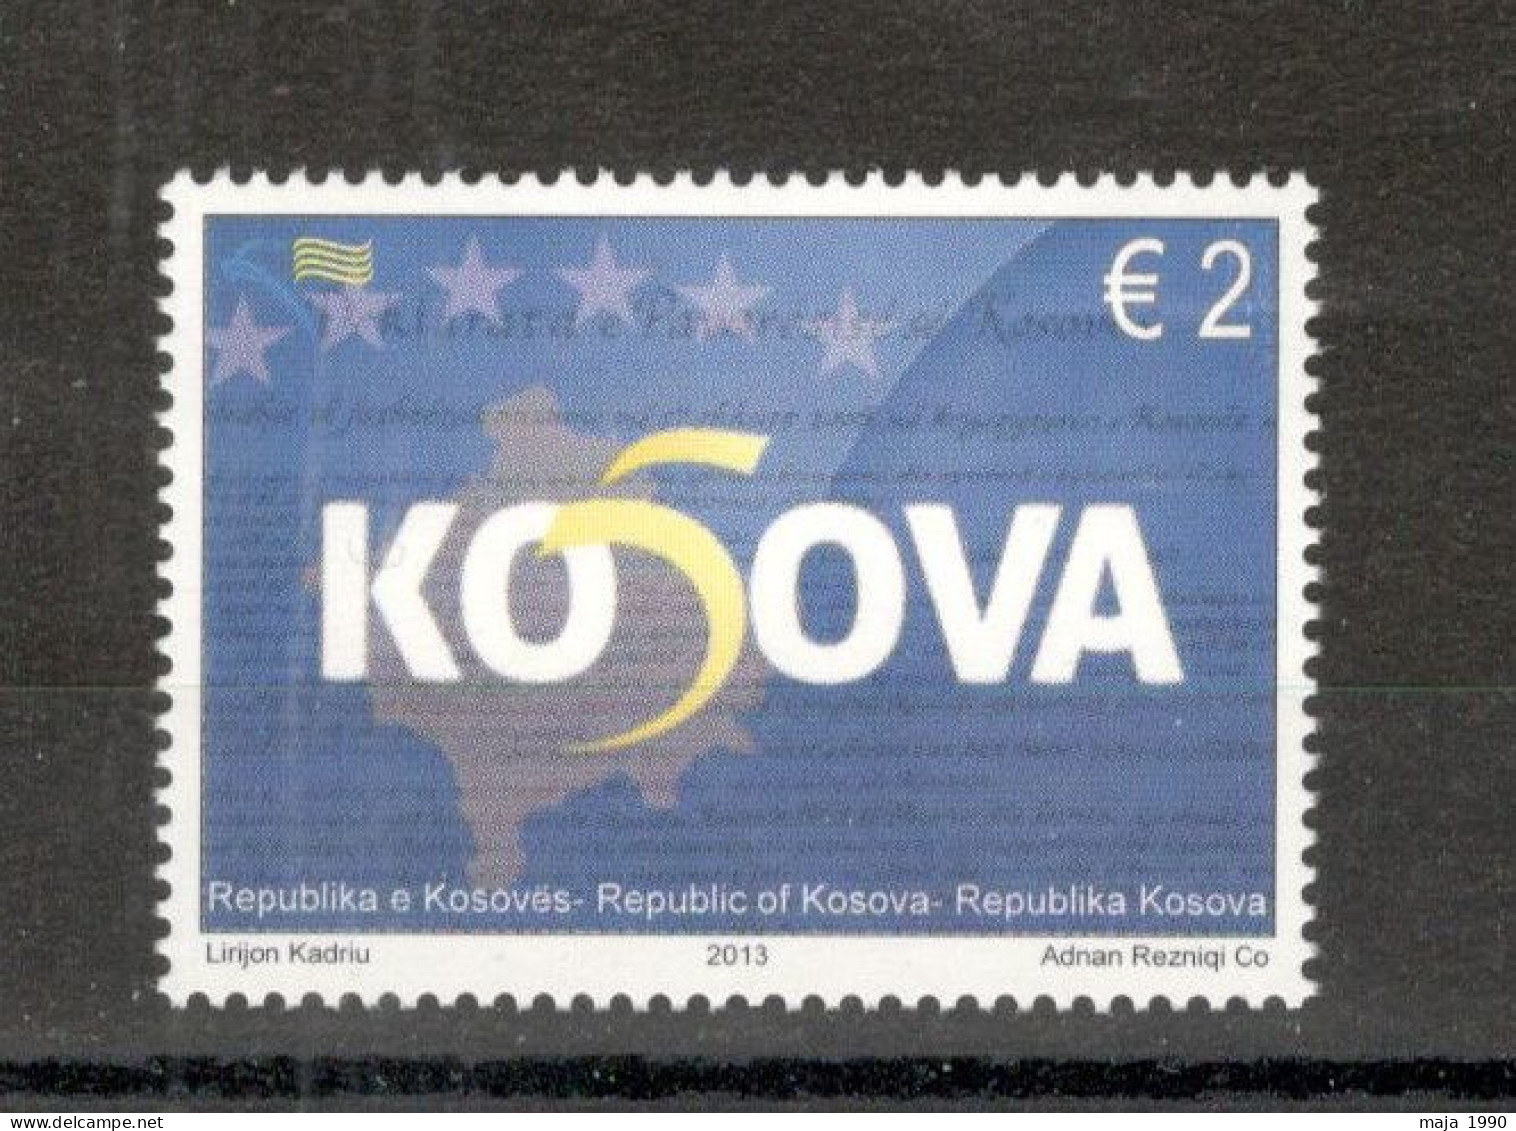 KOSOVO - MNH STMP - 5 YEARS OF INDEPENDENCE - 2013. - Kosovo